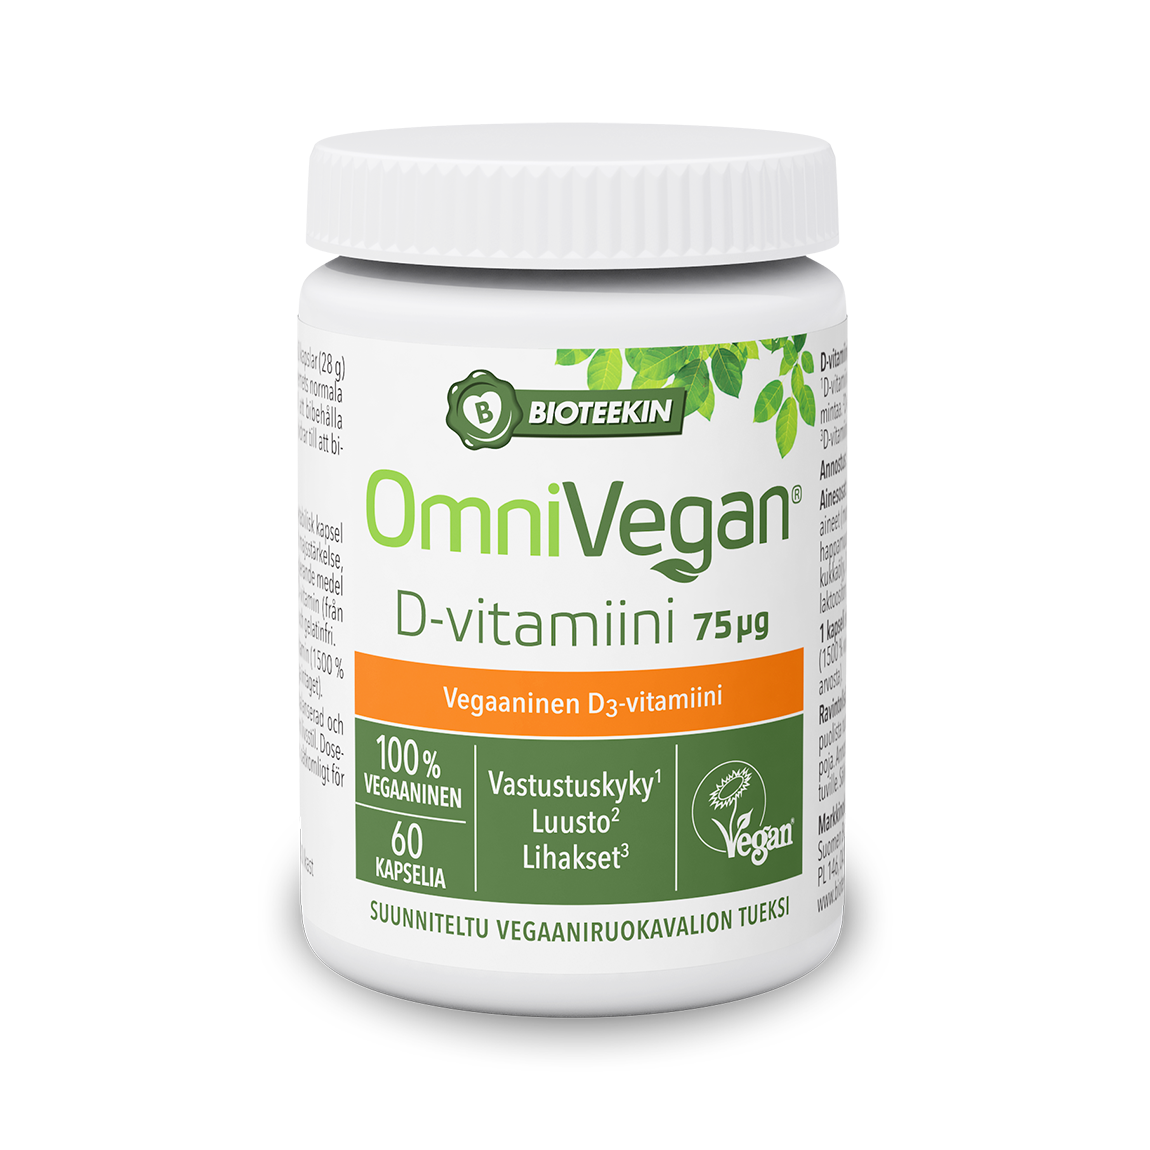 Bioteekin OmniVegan D-Vitamiini 75 µg 60 kaps.